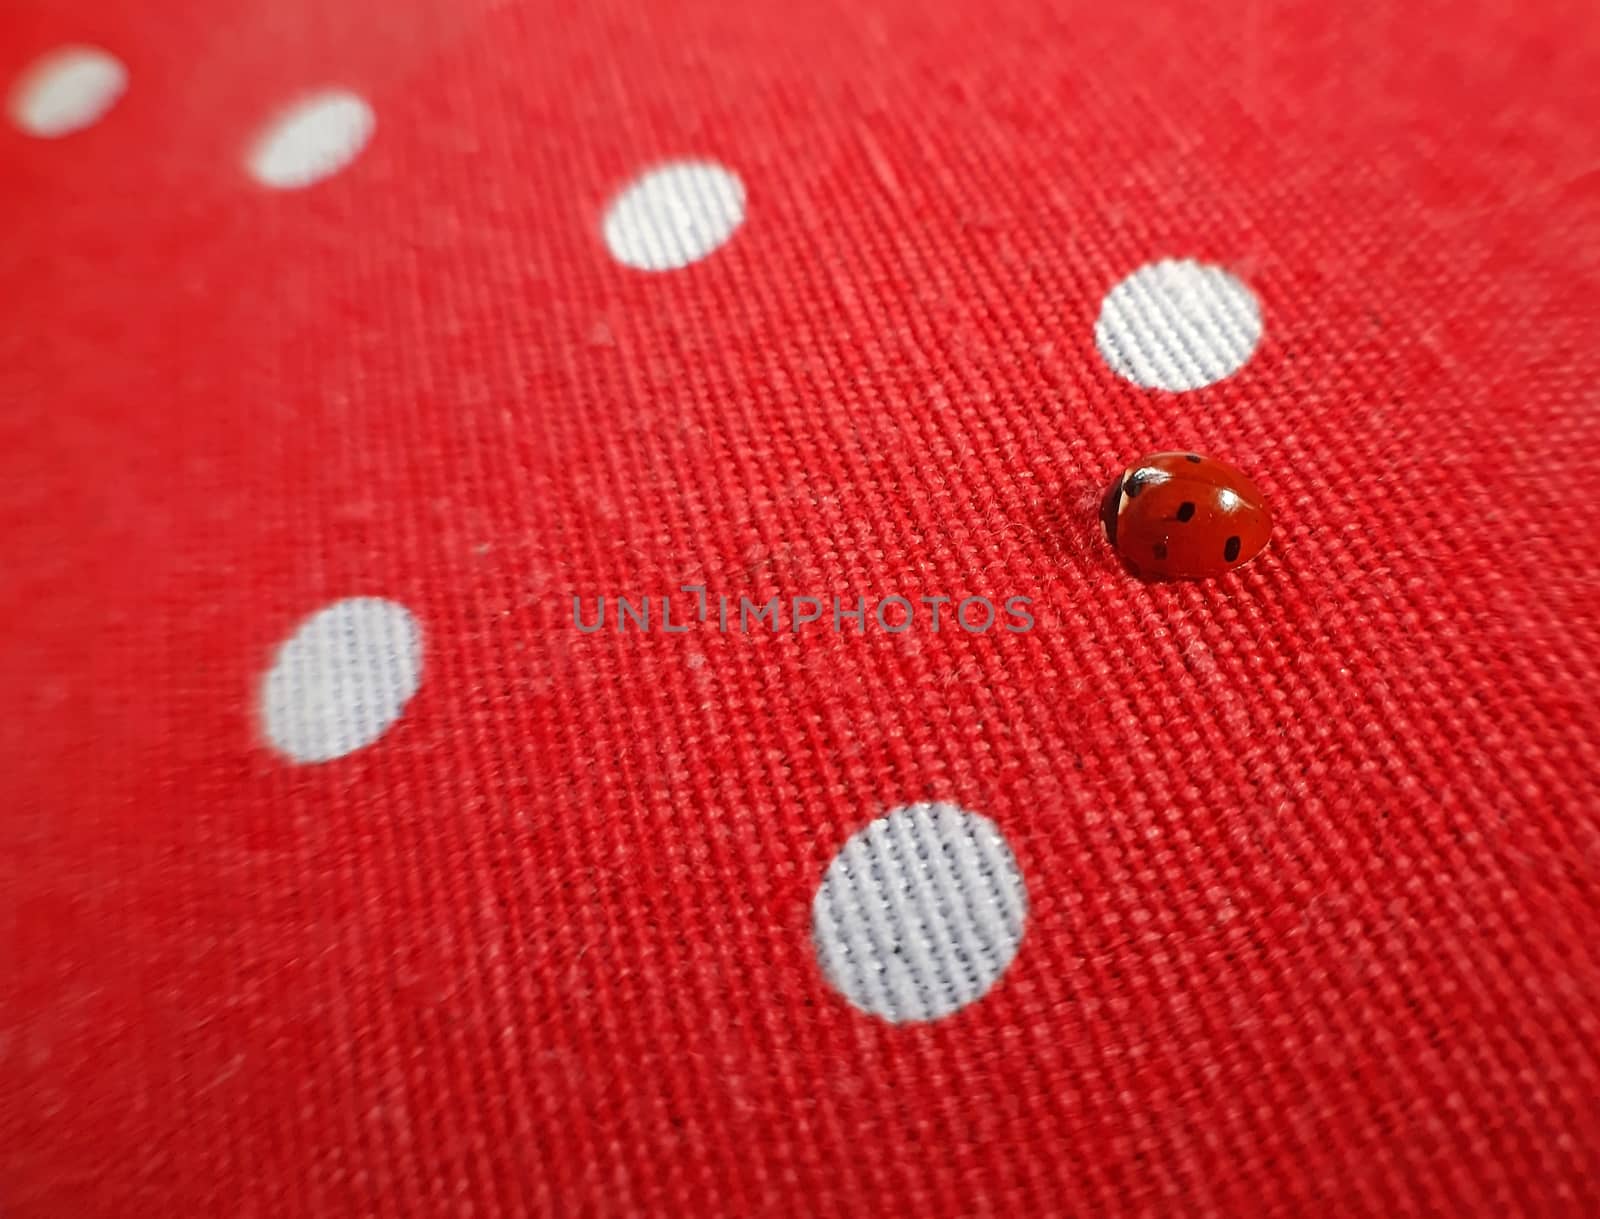 A ladybug. Macro photography red fabric background by Mindru